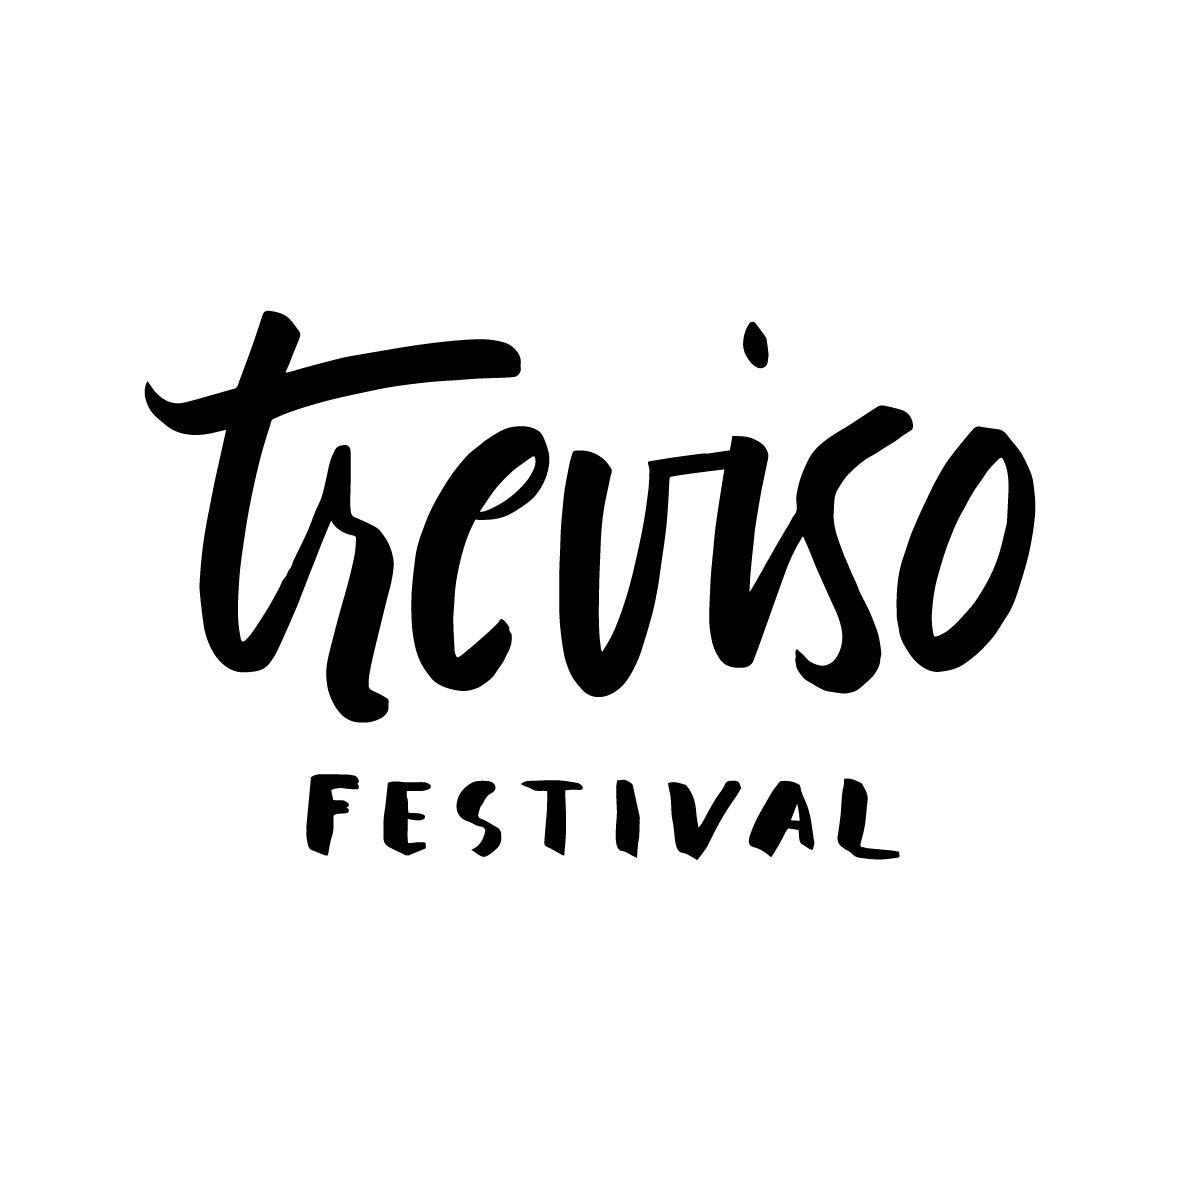 Treviso Logo - Treviso Festival - Solelucadoc